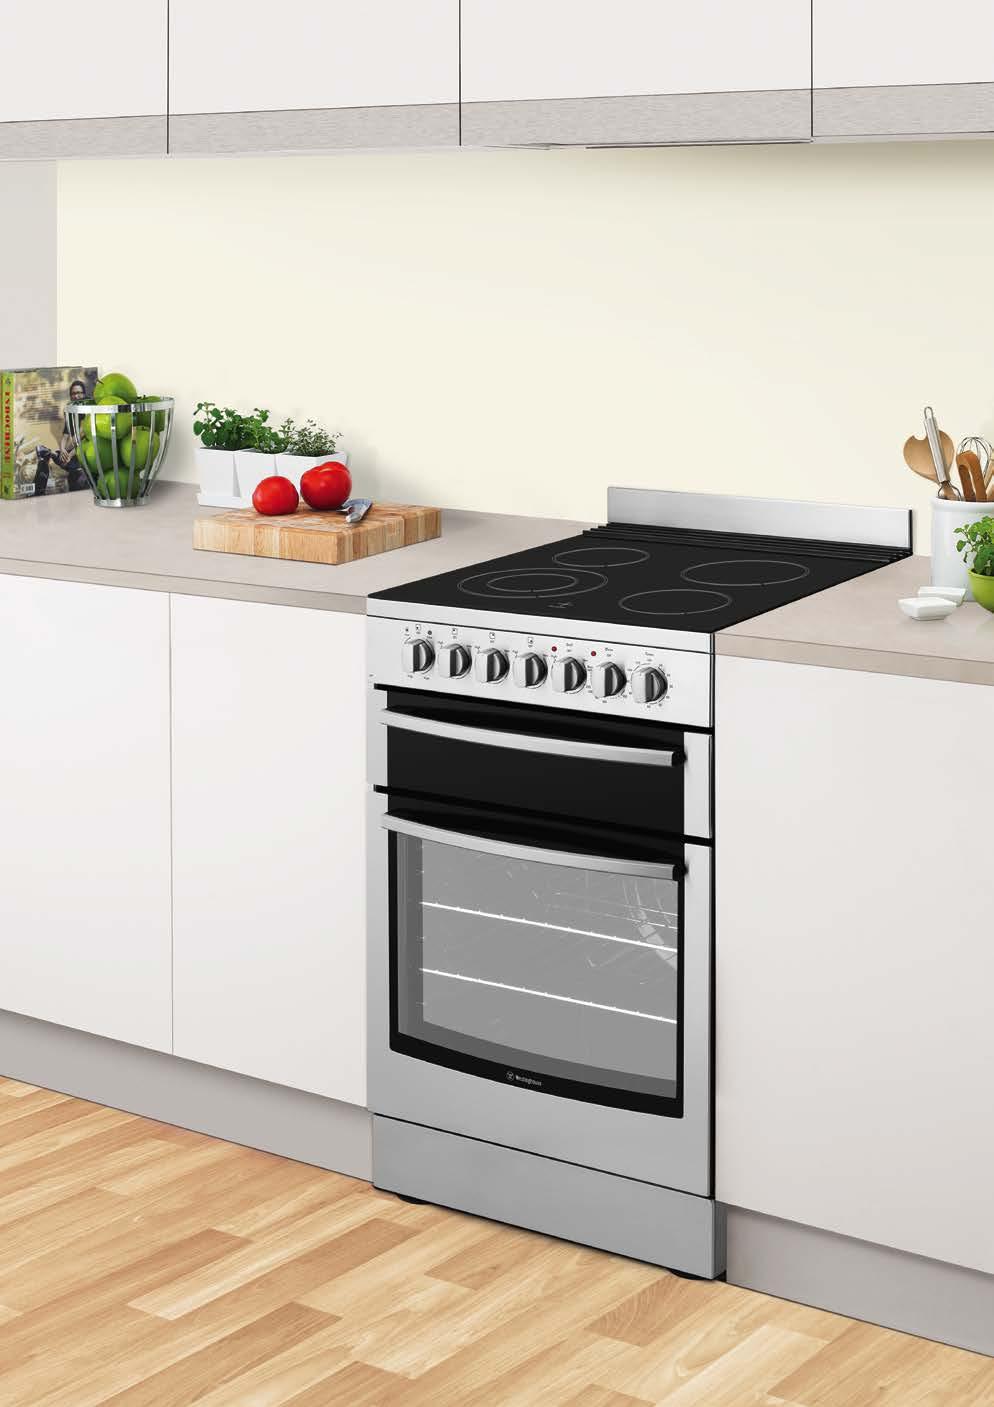 54cm & 60cm slot-in cooker range High performance cooktops Choose between